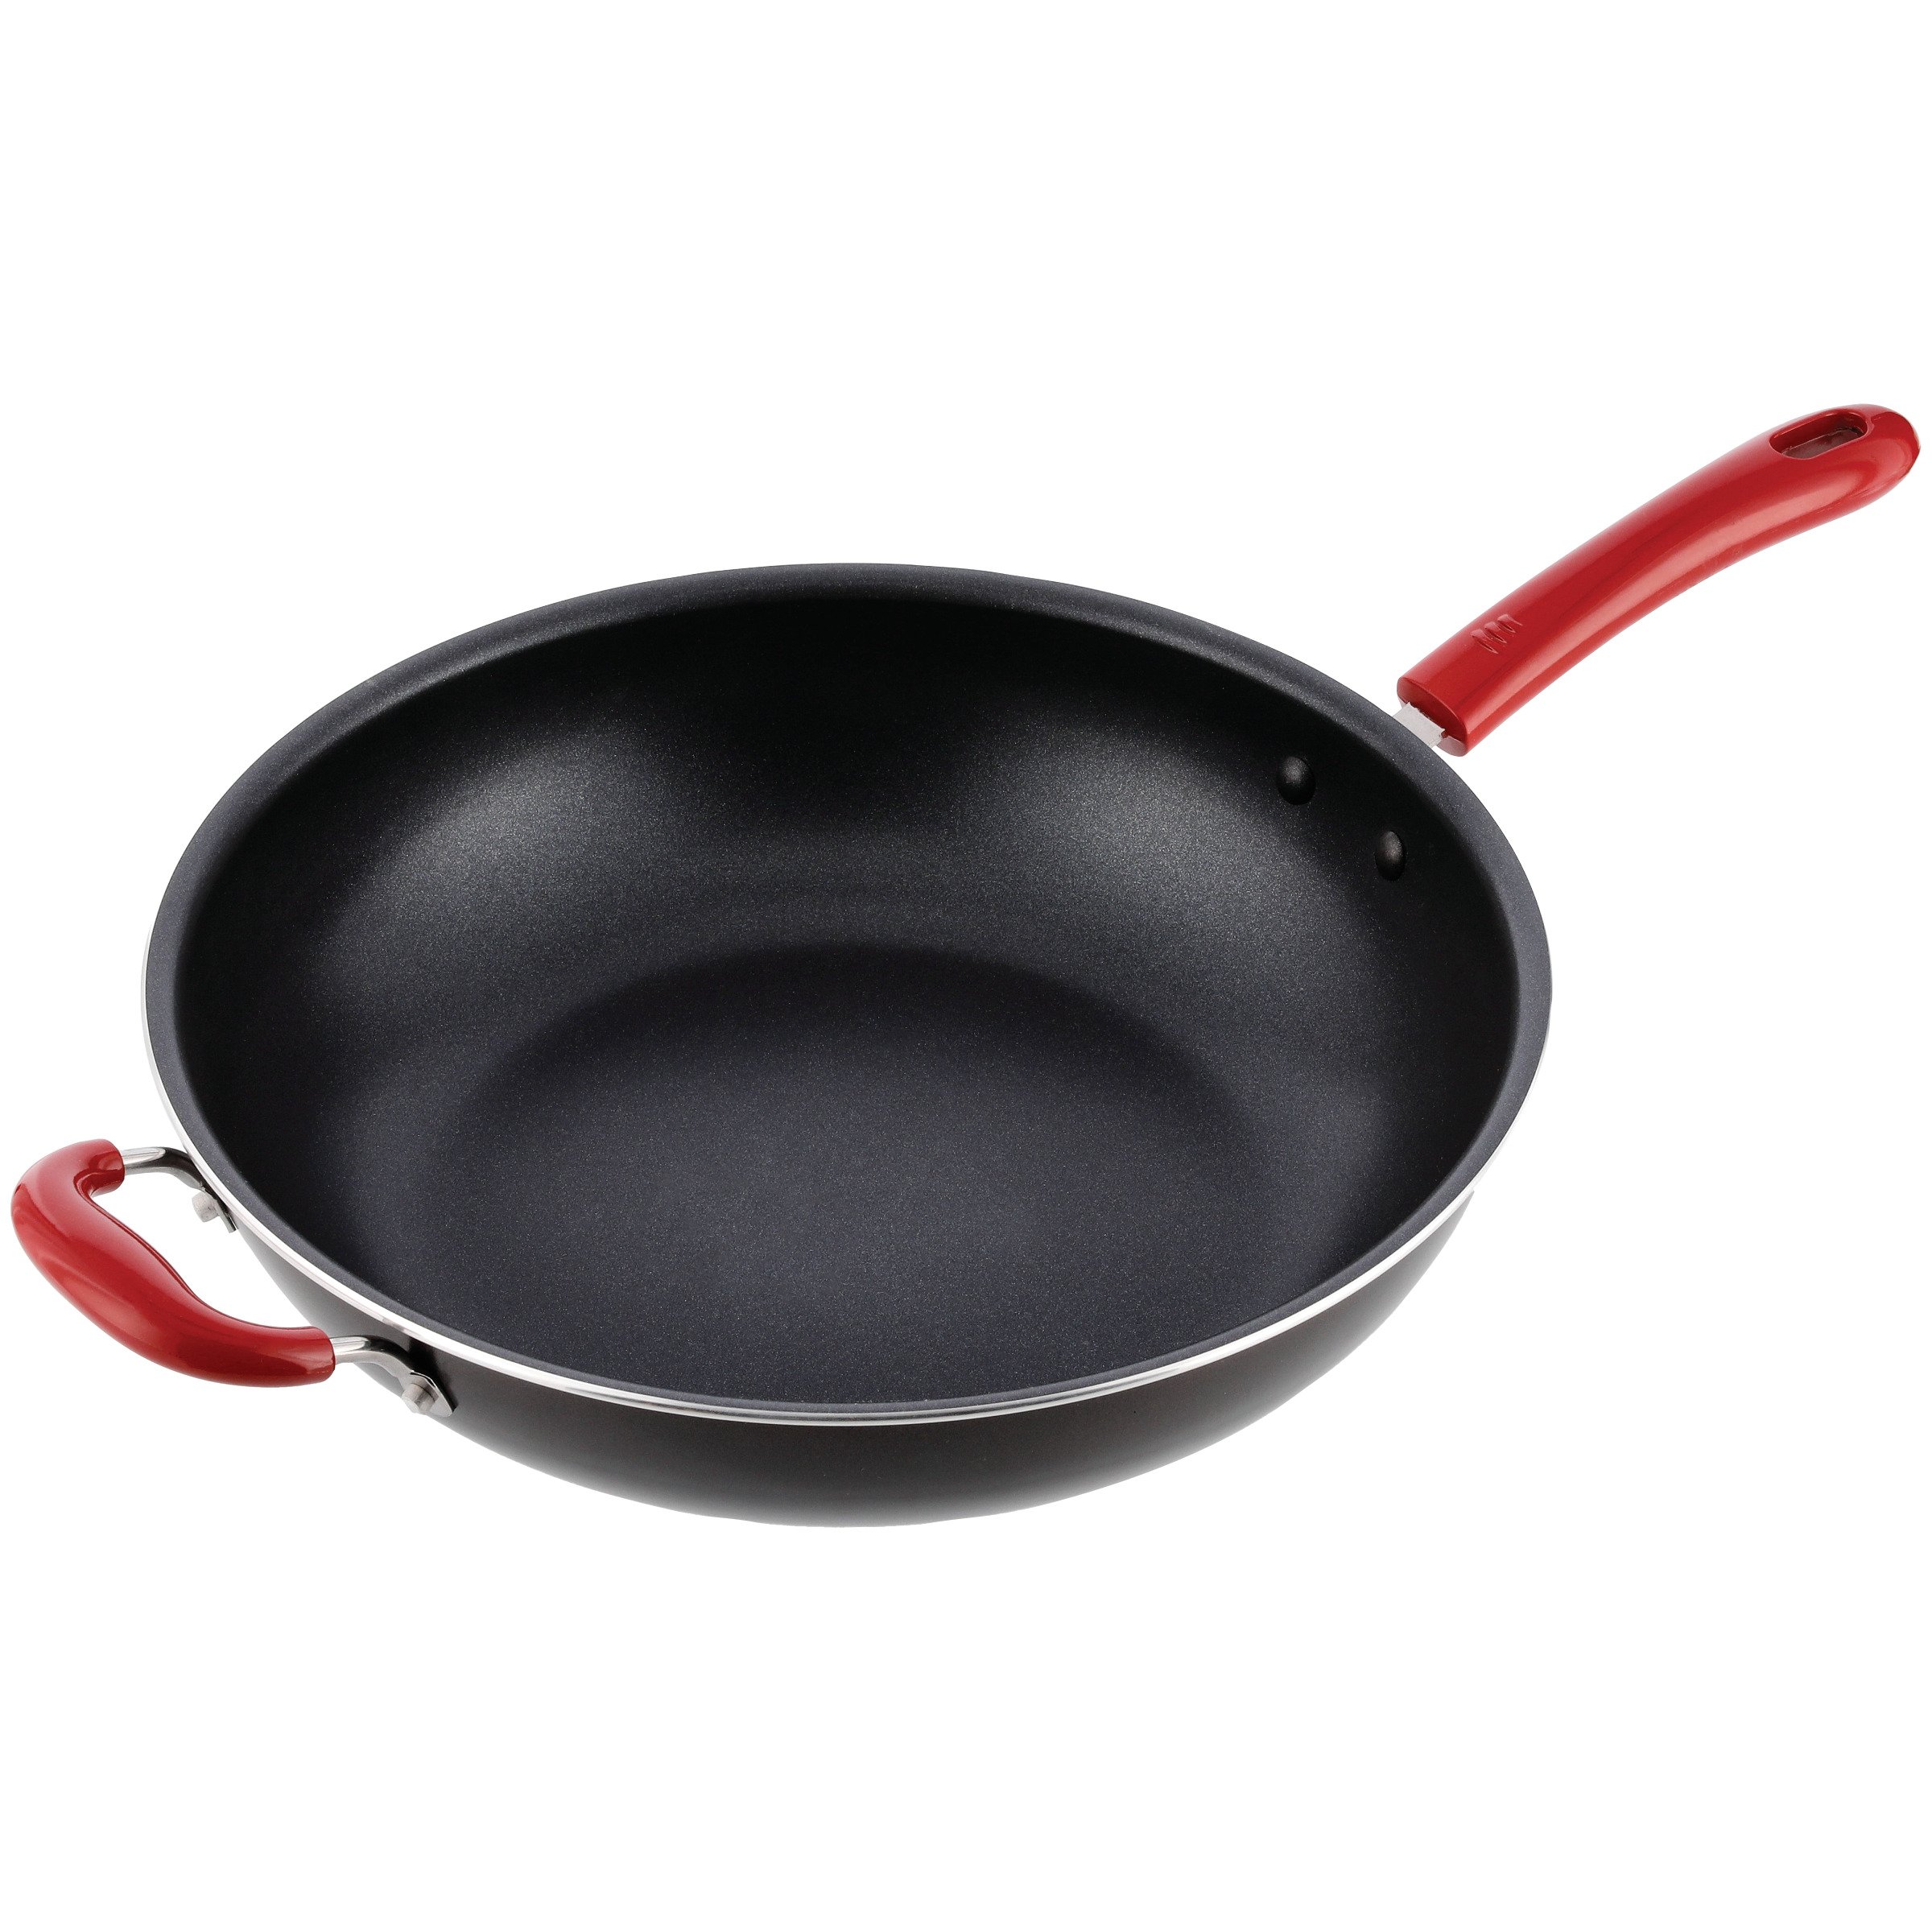 Cocinaware Red Enamel Cast Iron Fry Pan - Shop Frying Pans